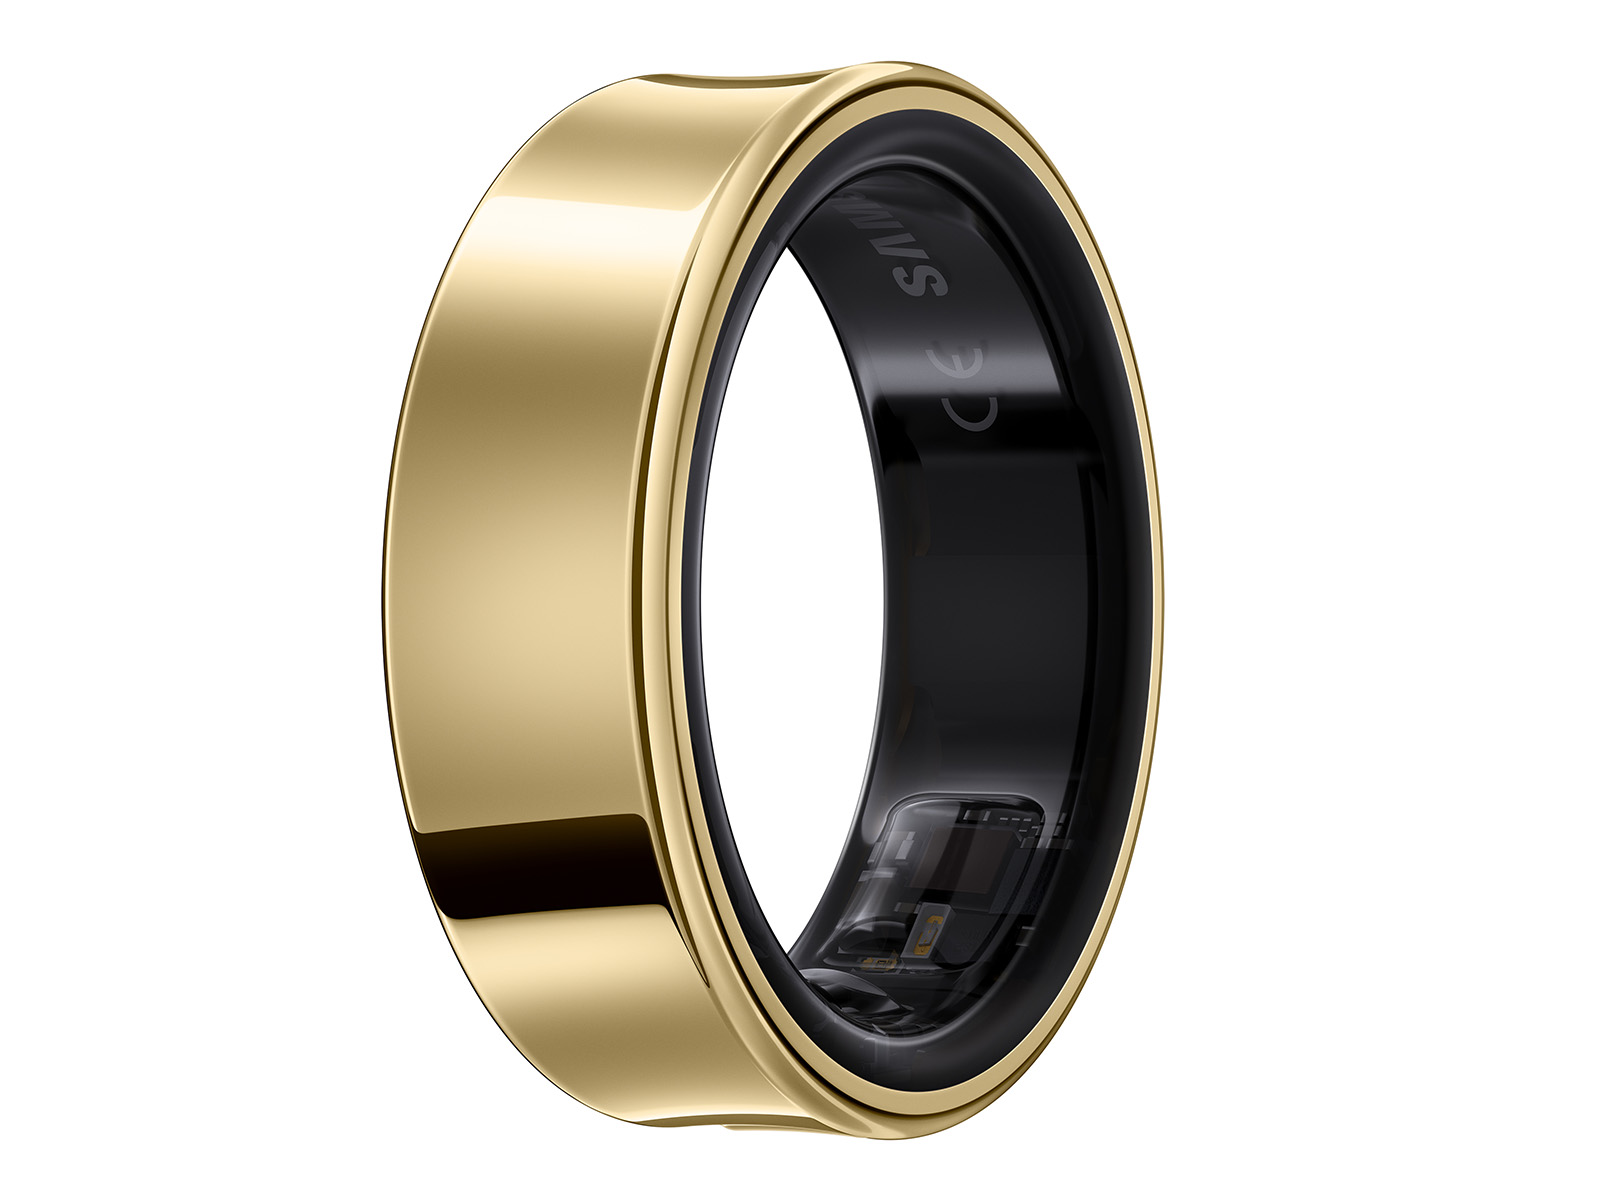 Thumbnail image of Galaxy Ring, Size 6, Titanium Gold